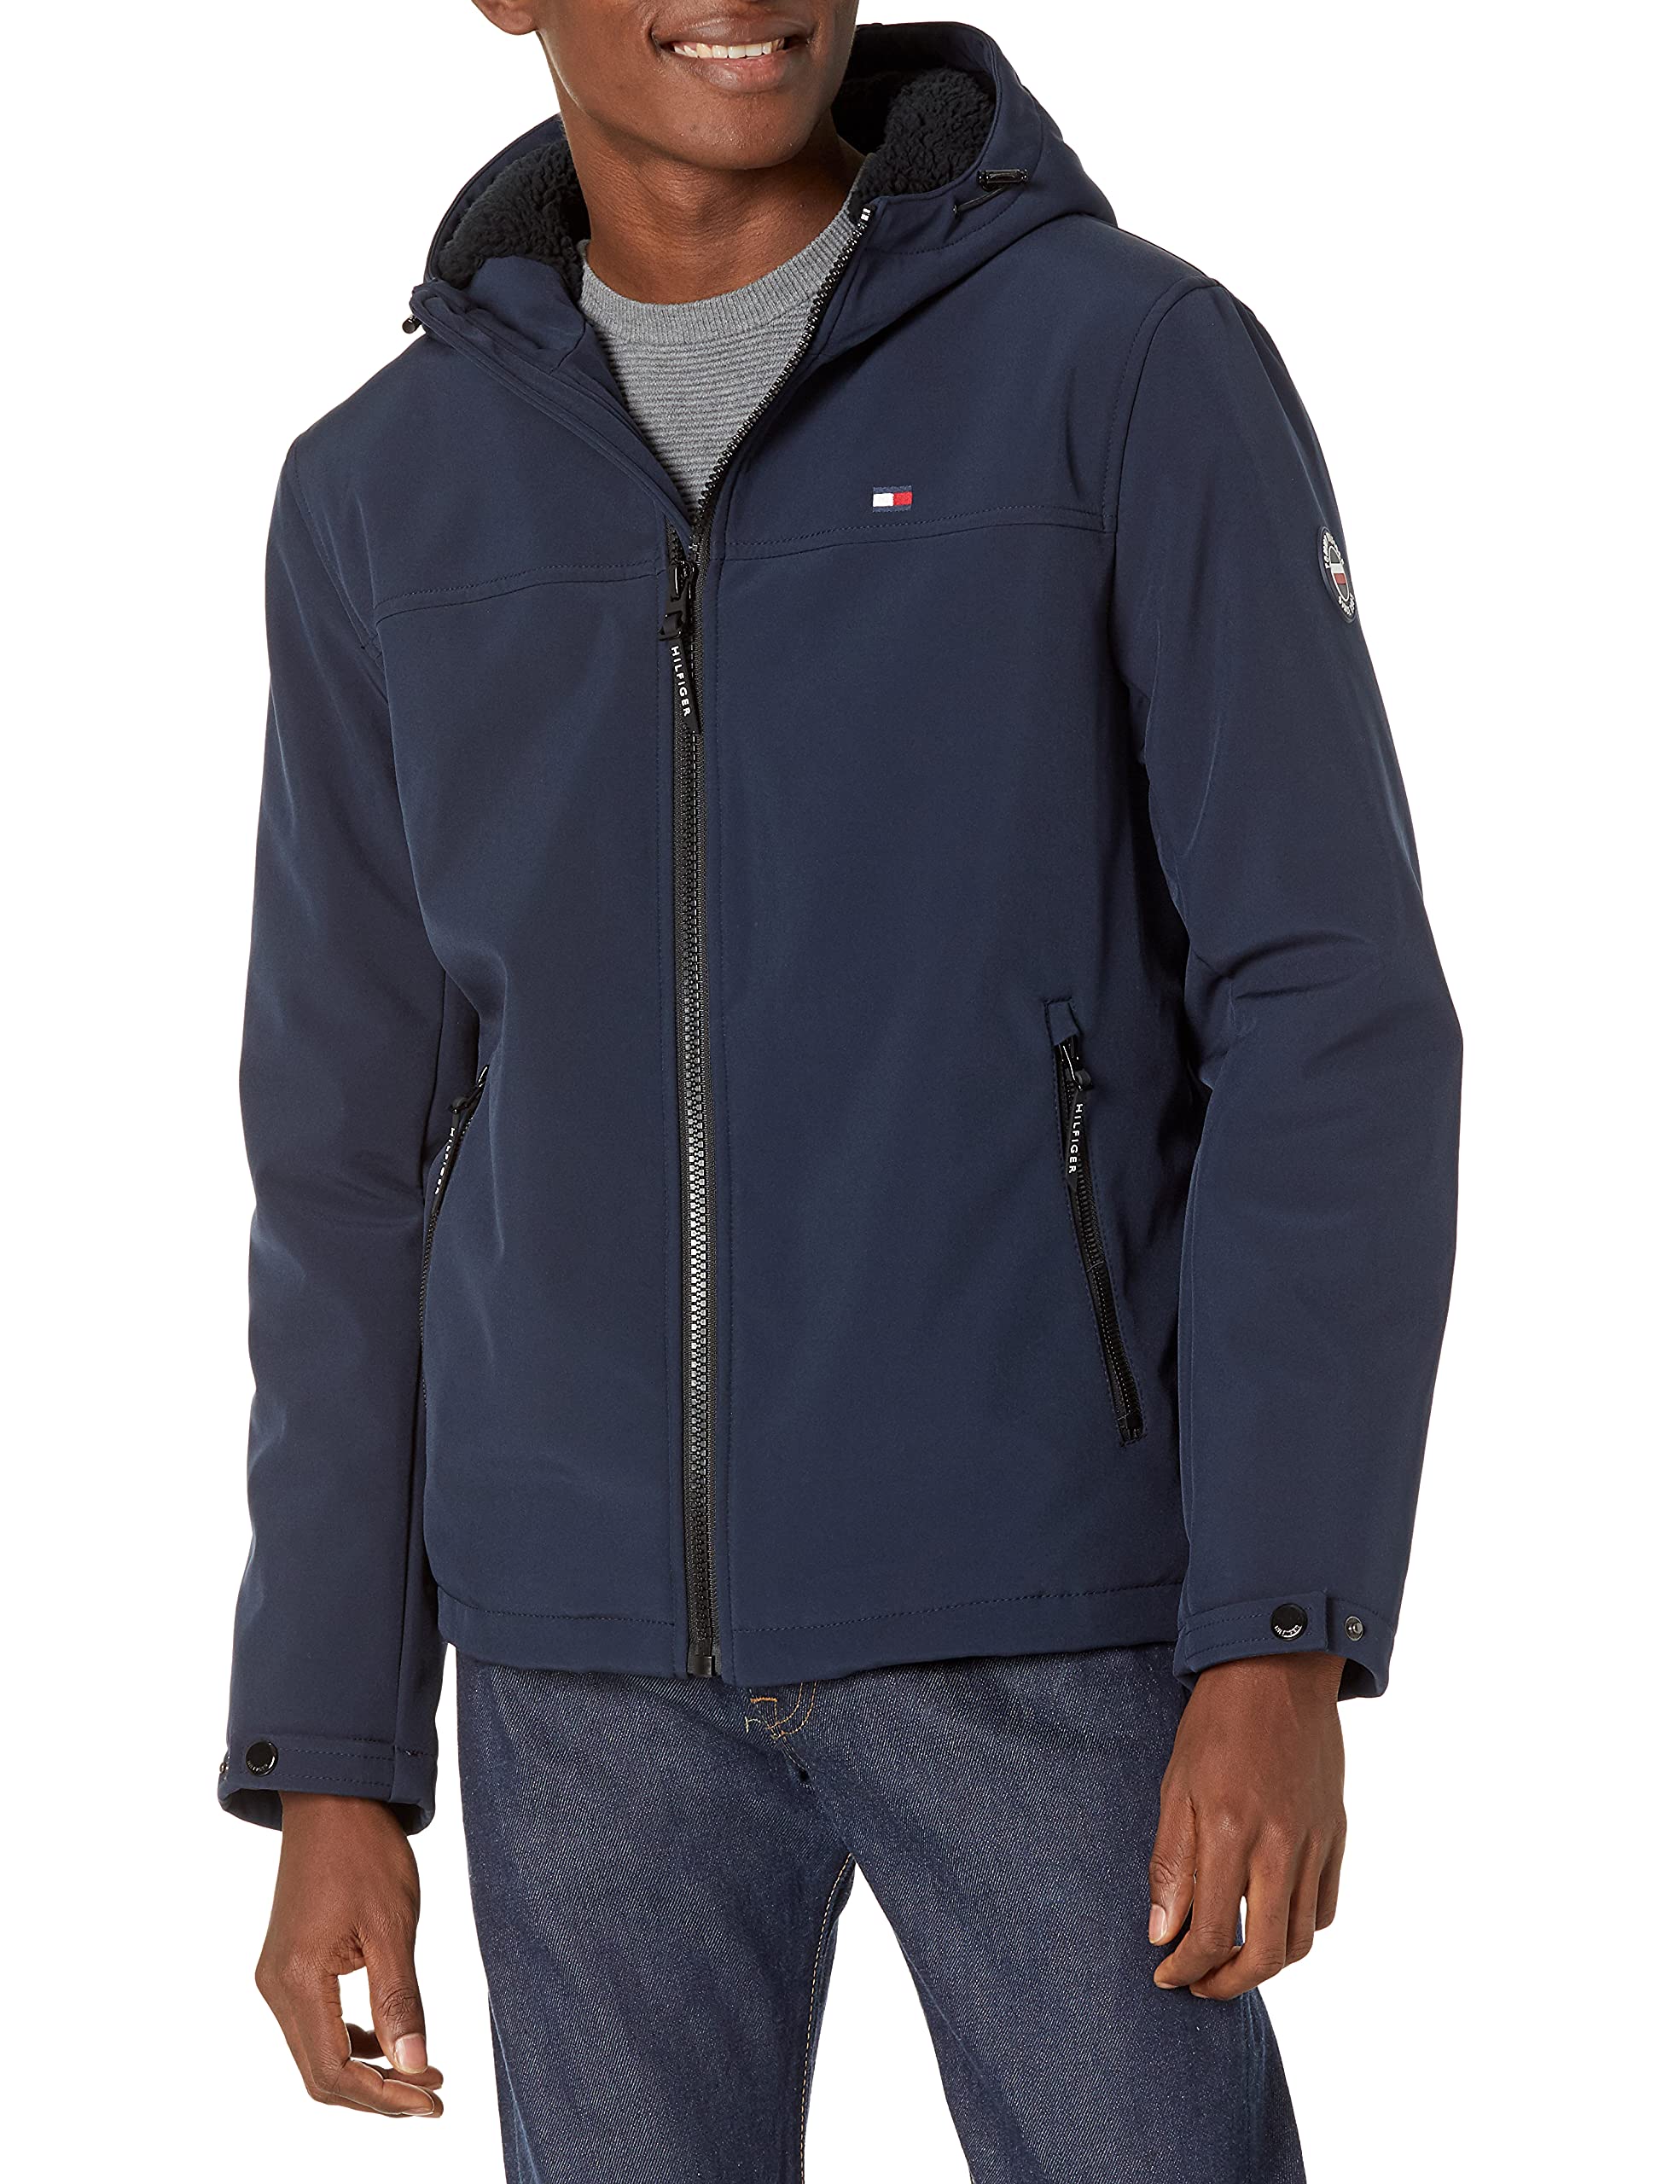 Tommy Hilfiger Men's Soft Shell Sherpa Lined Performance Jacket